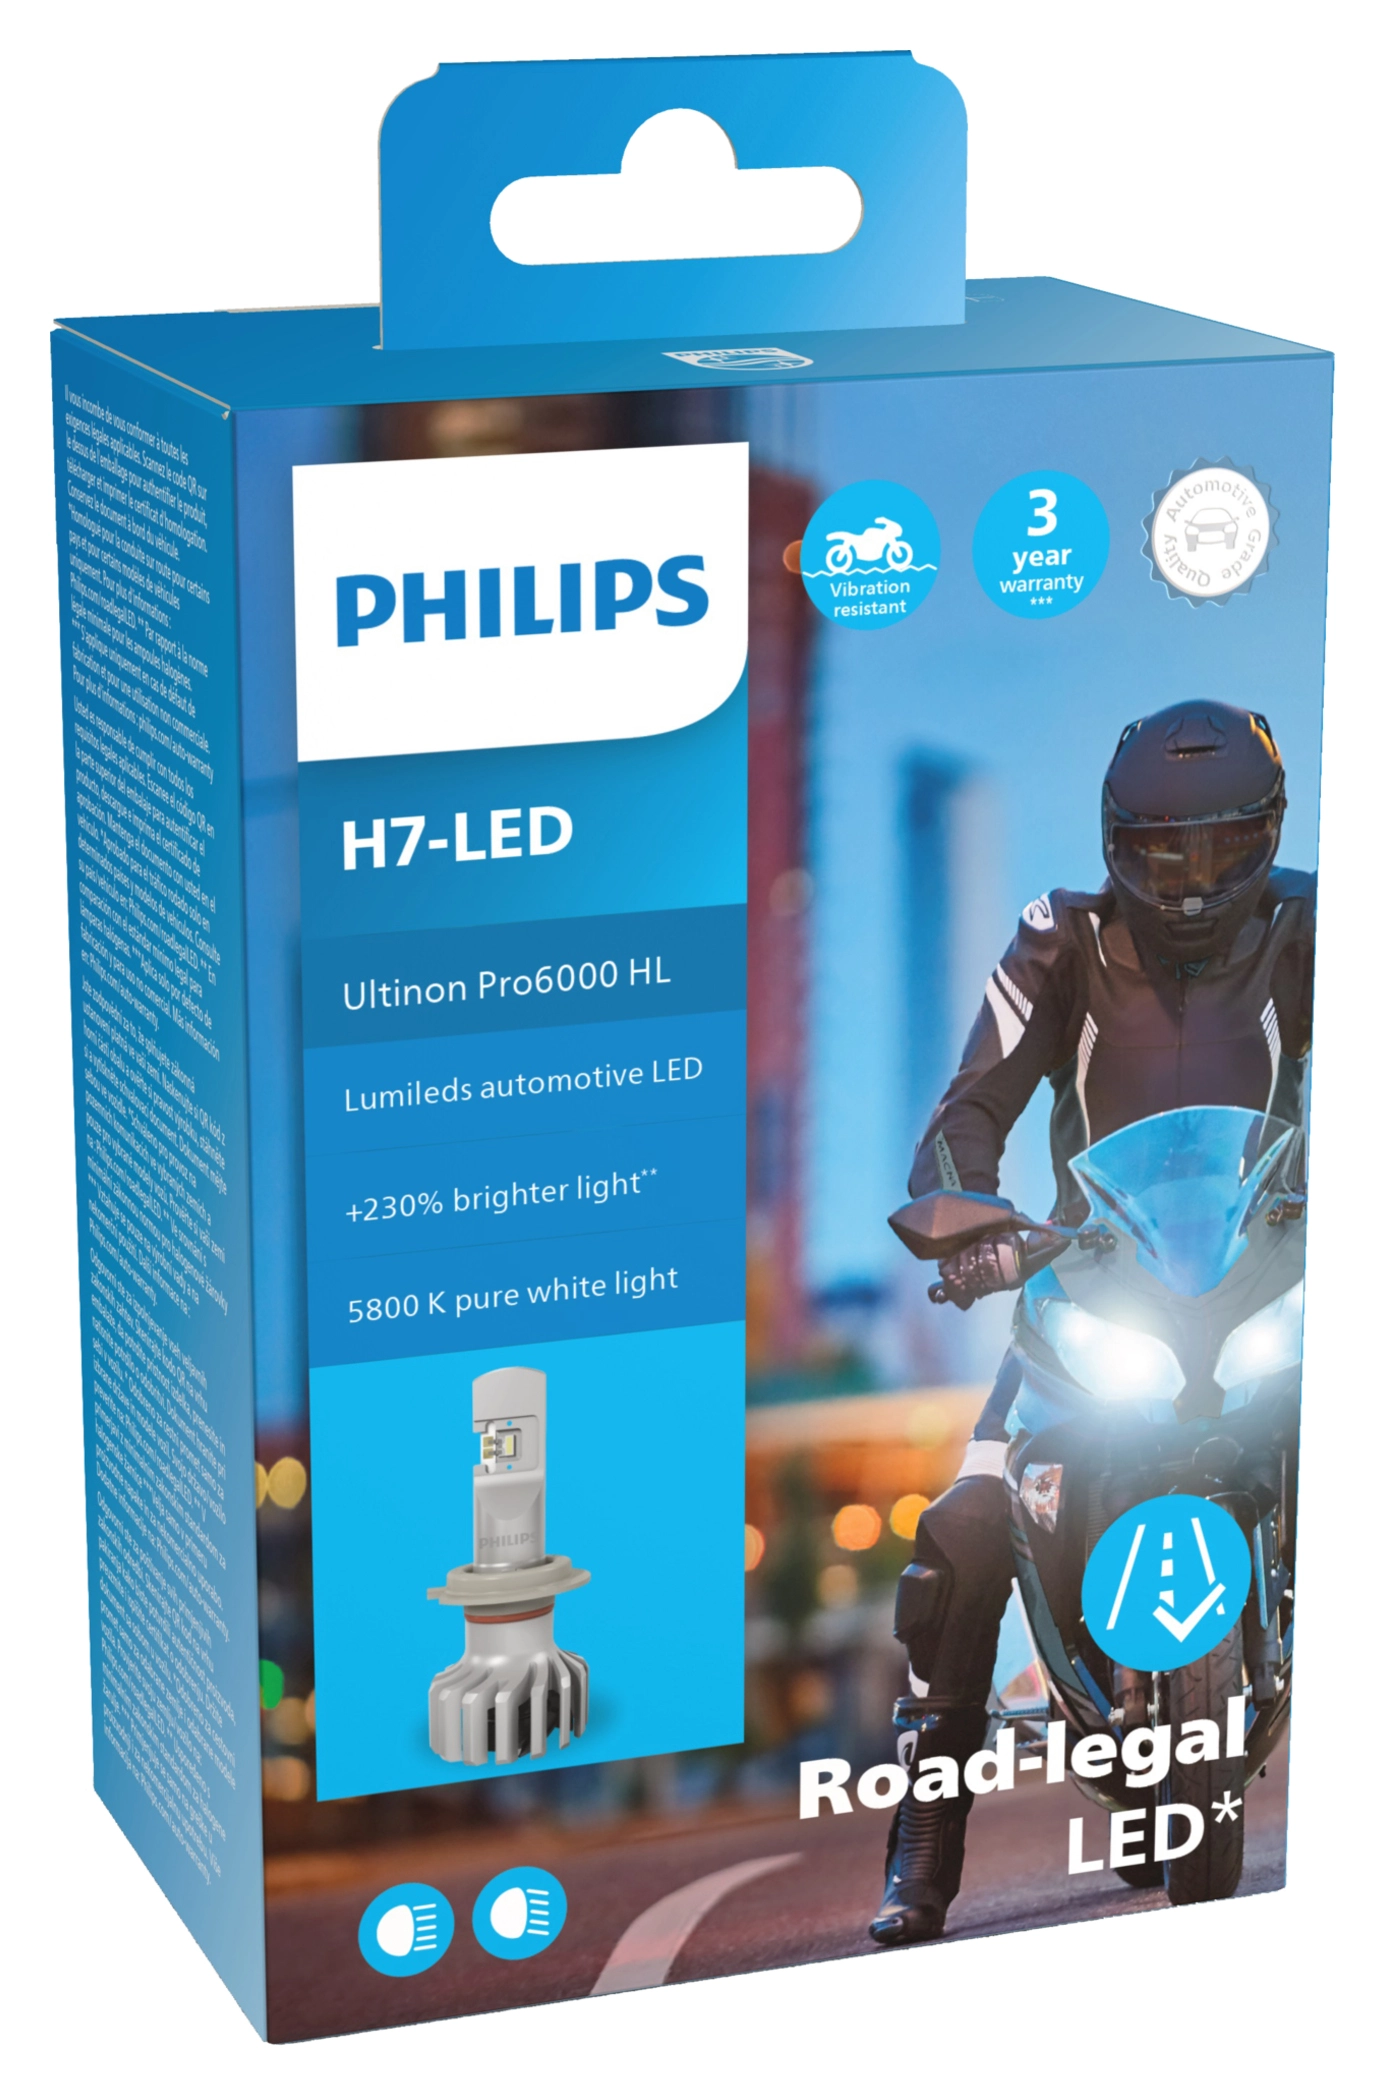 Philips H7-LED Ultinon Pro6000 Headlight Bulb 5800K With Mot Approval